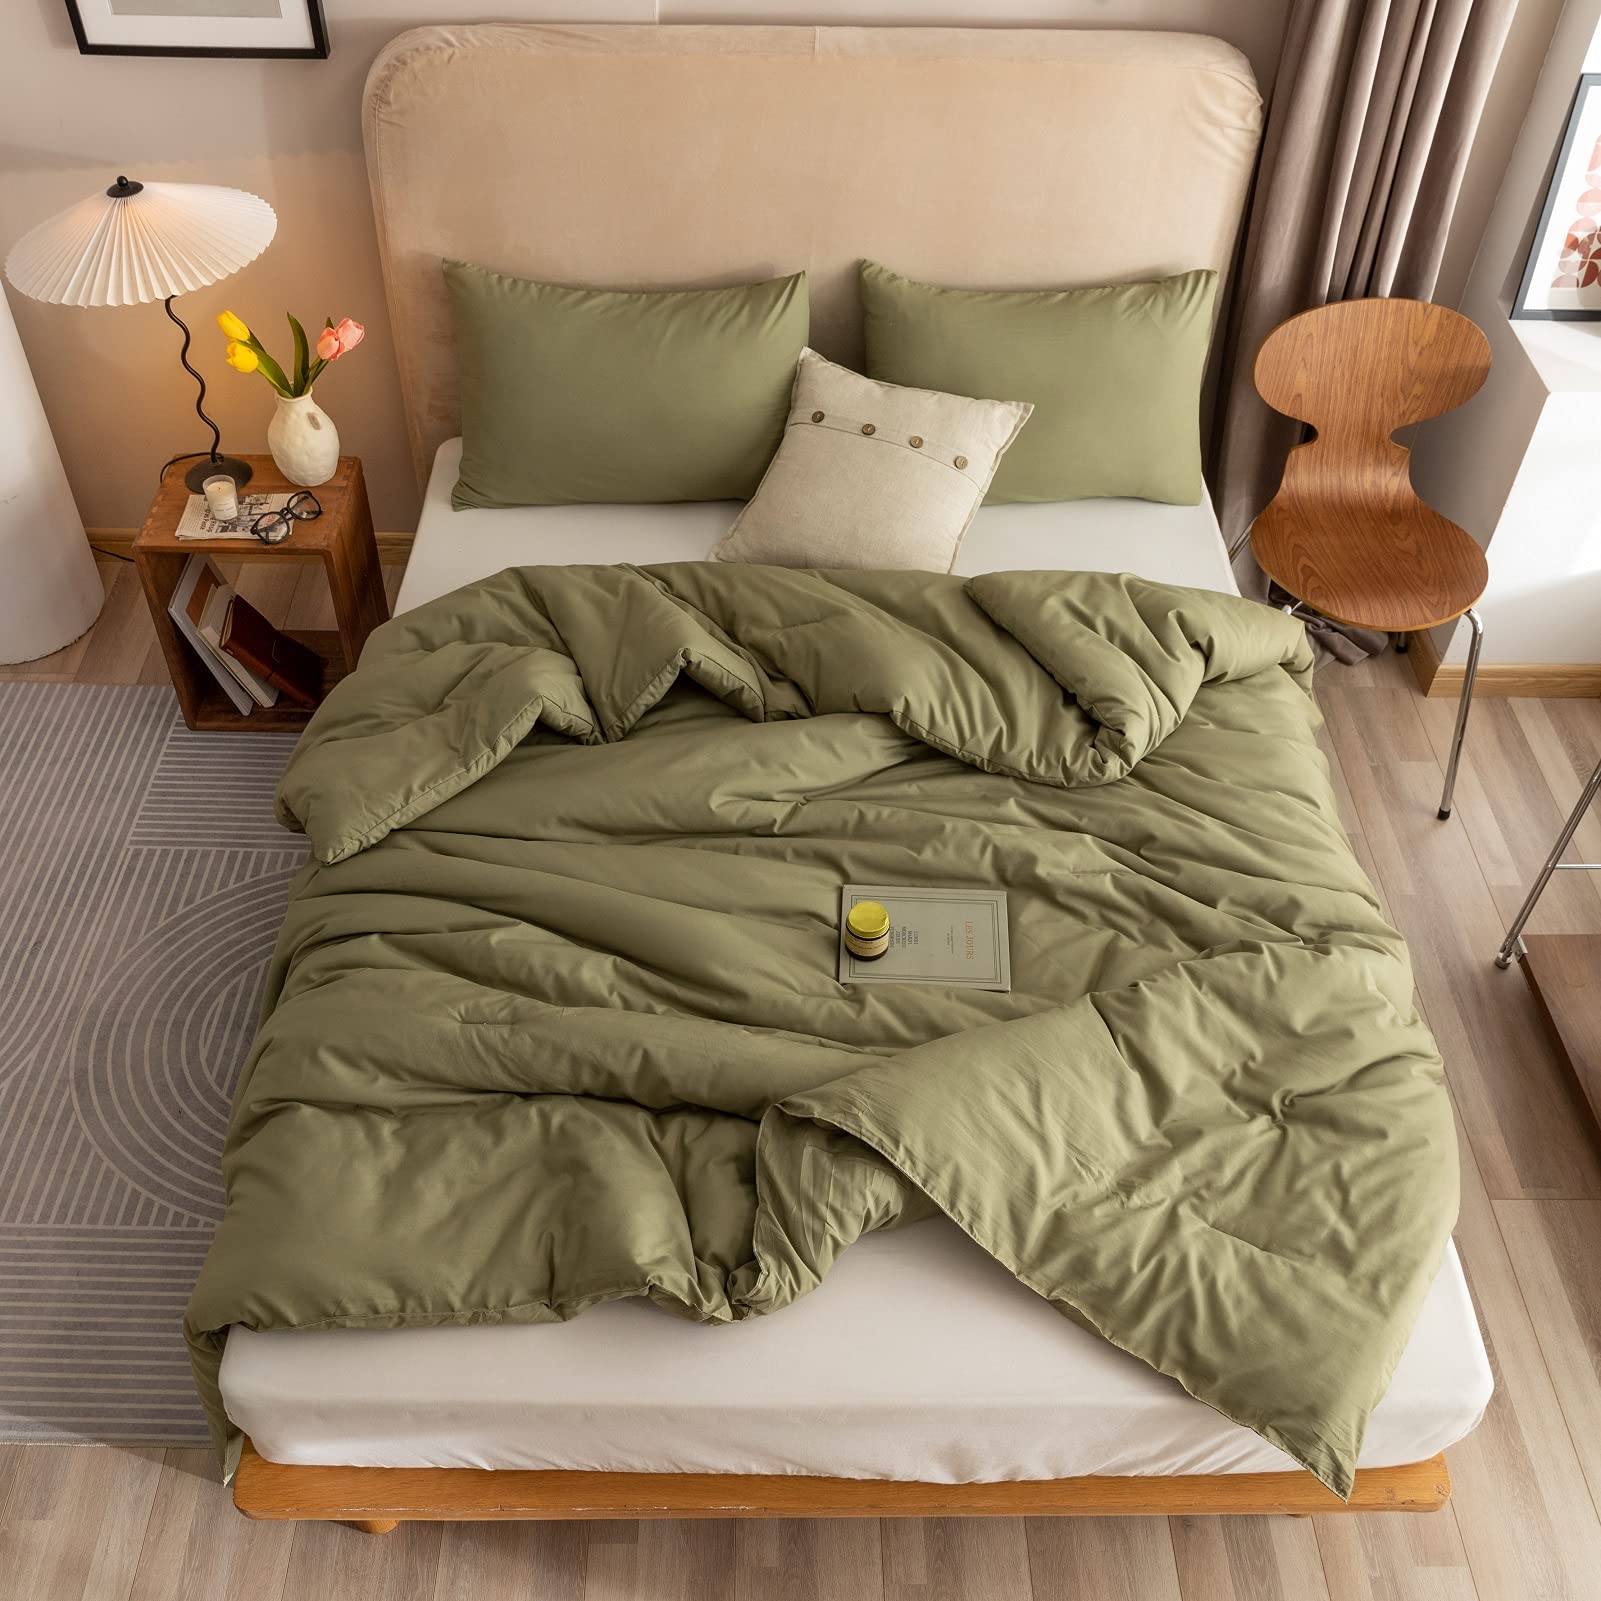 ROSGONIA Twin Comforter Set for College Girls Boys Teens Olive Green,1 Boho Comforter & 1 Pillowcase, Lightweight Kids Comforter Sets All Season Dorm Bedding